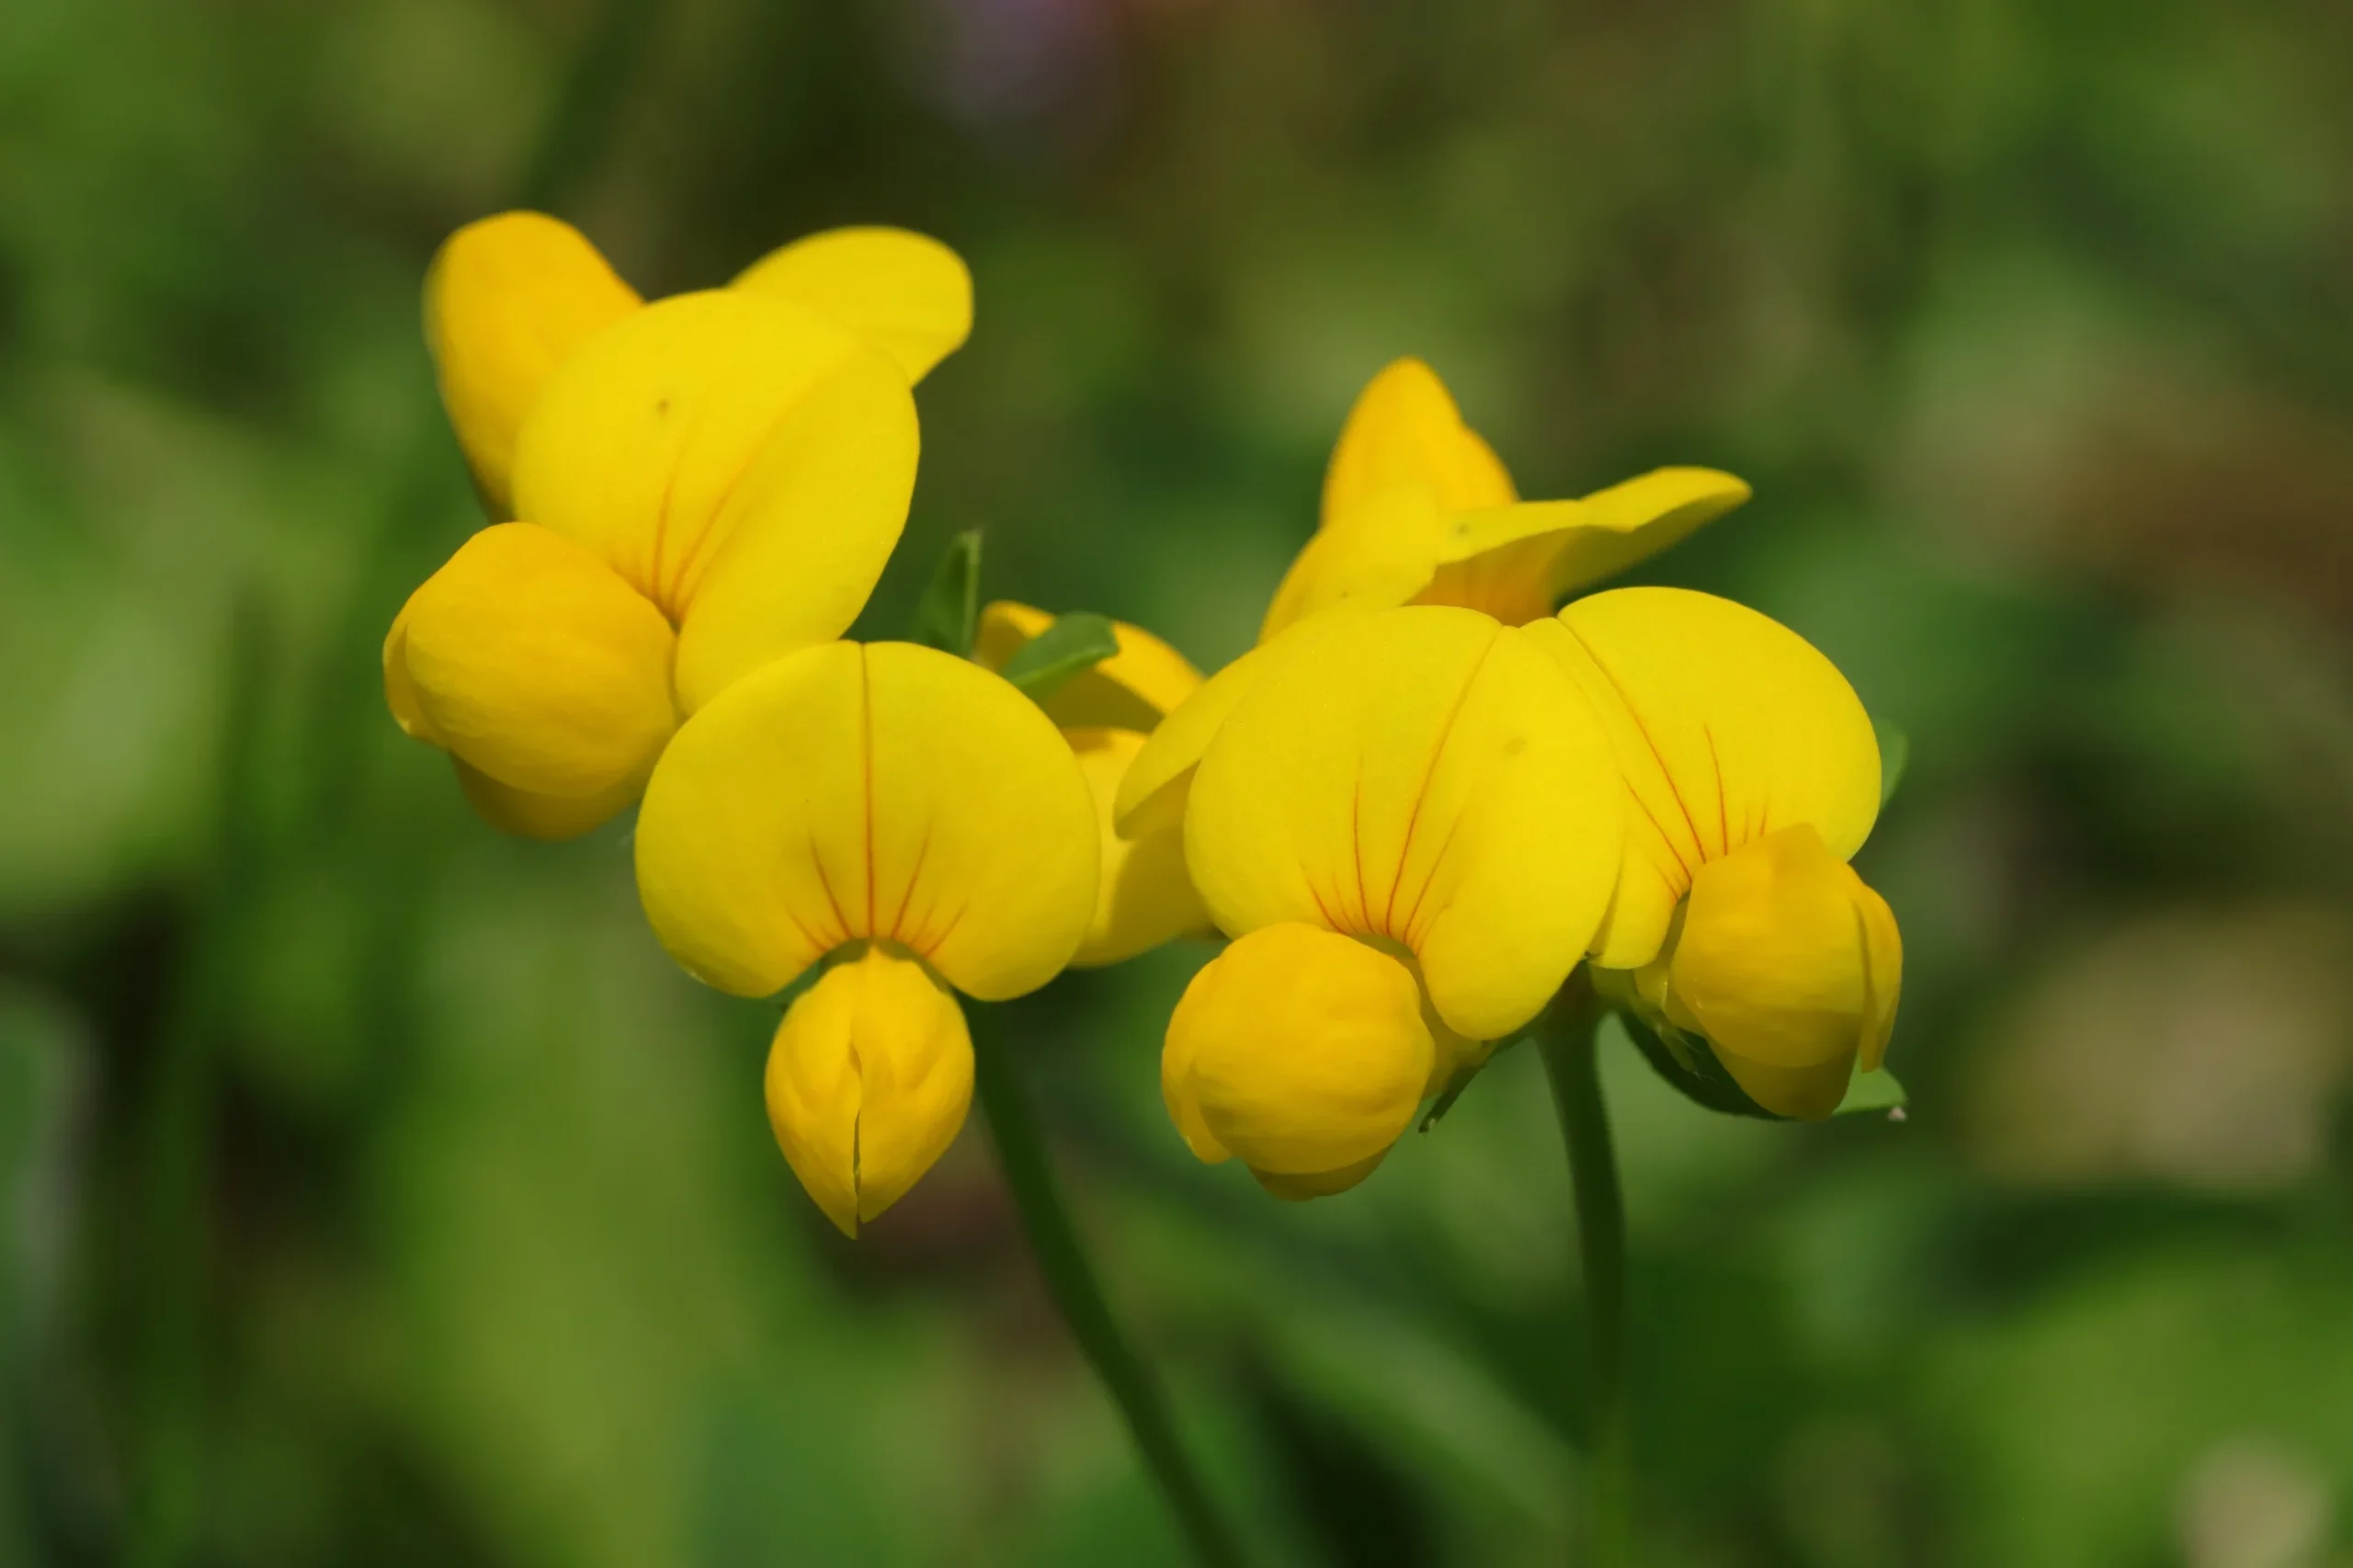 Bird's-foot trefoil - yellow flowers in detail